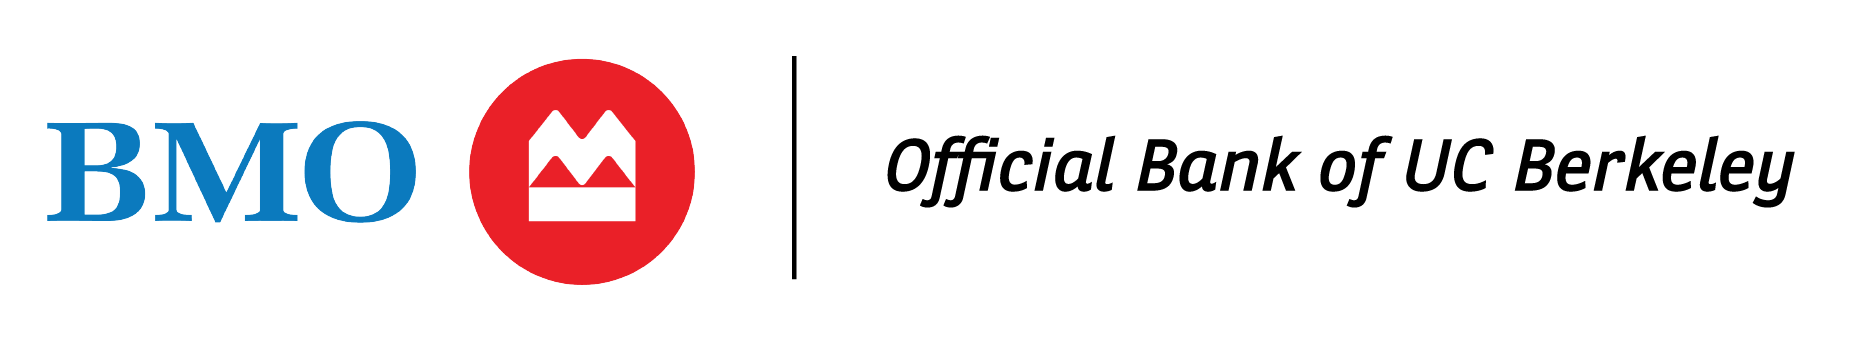 BMO and UC Berkeley cobranded logo